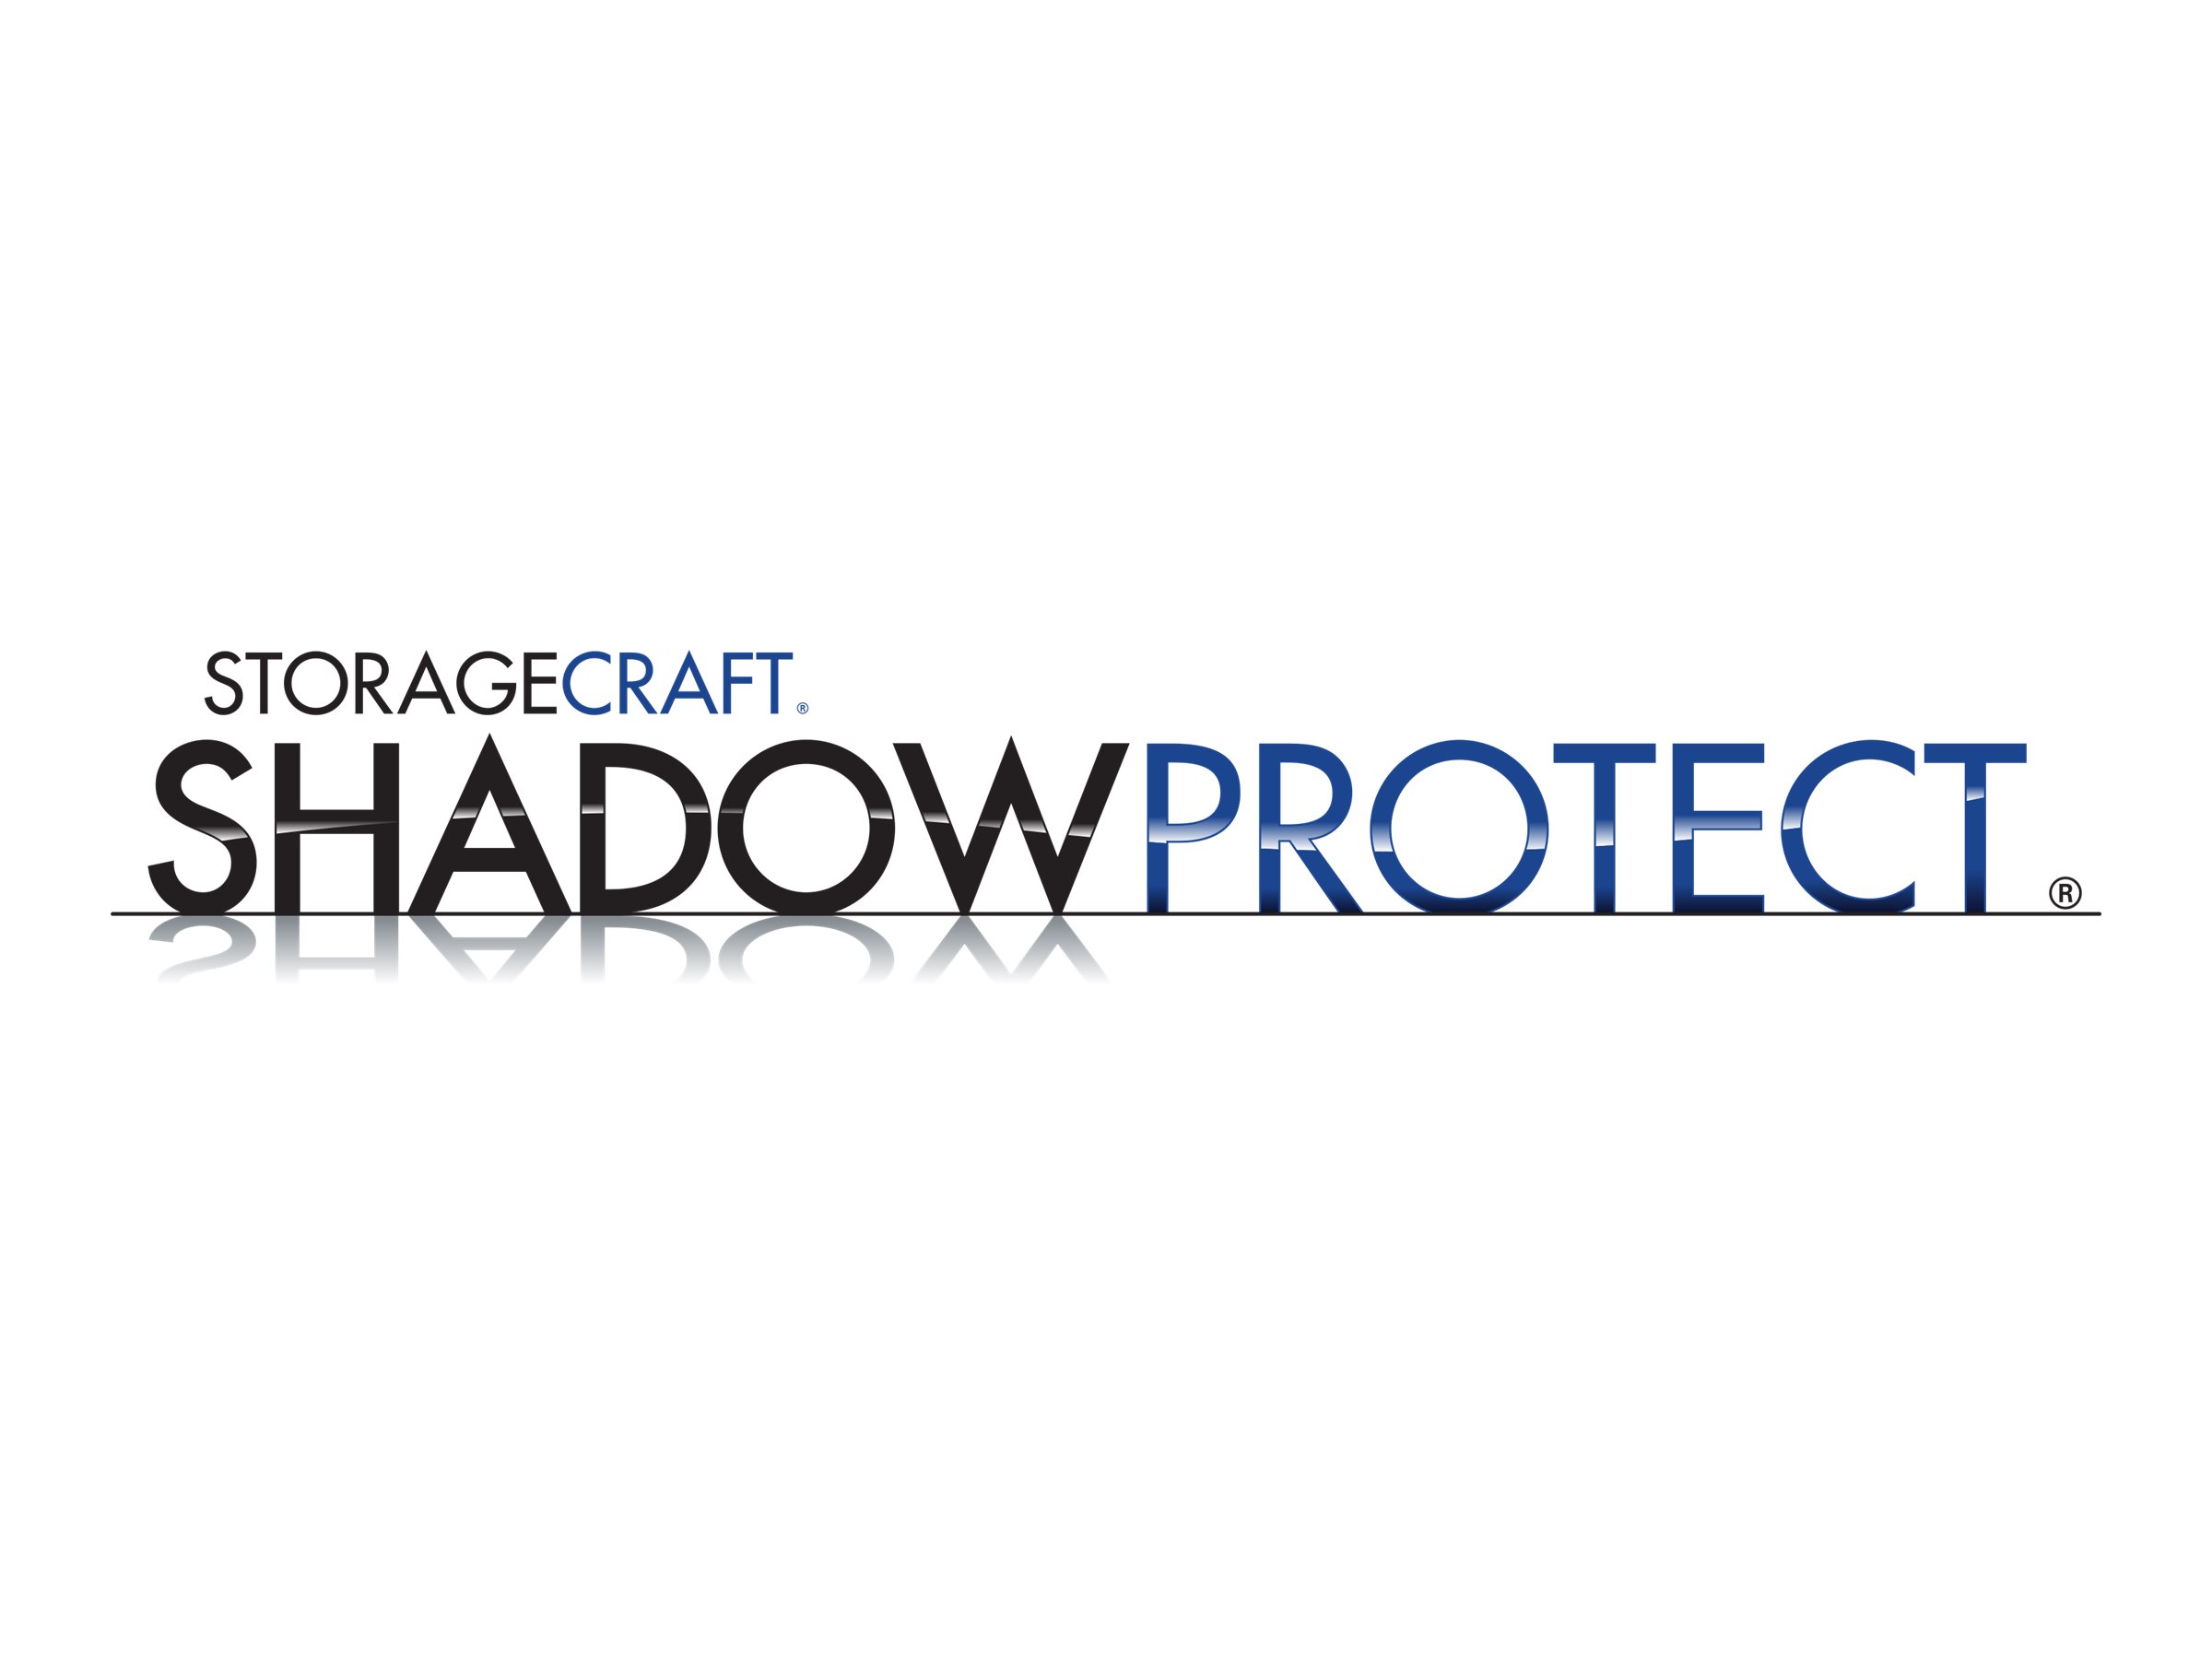 ShadowProtect Granular Recovery for Exchange - (v. 8.x) - Projektlizenz (60 Tage) + Maintenance - unbegrenzte Anzahl Postfcher 